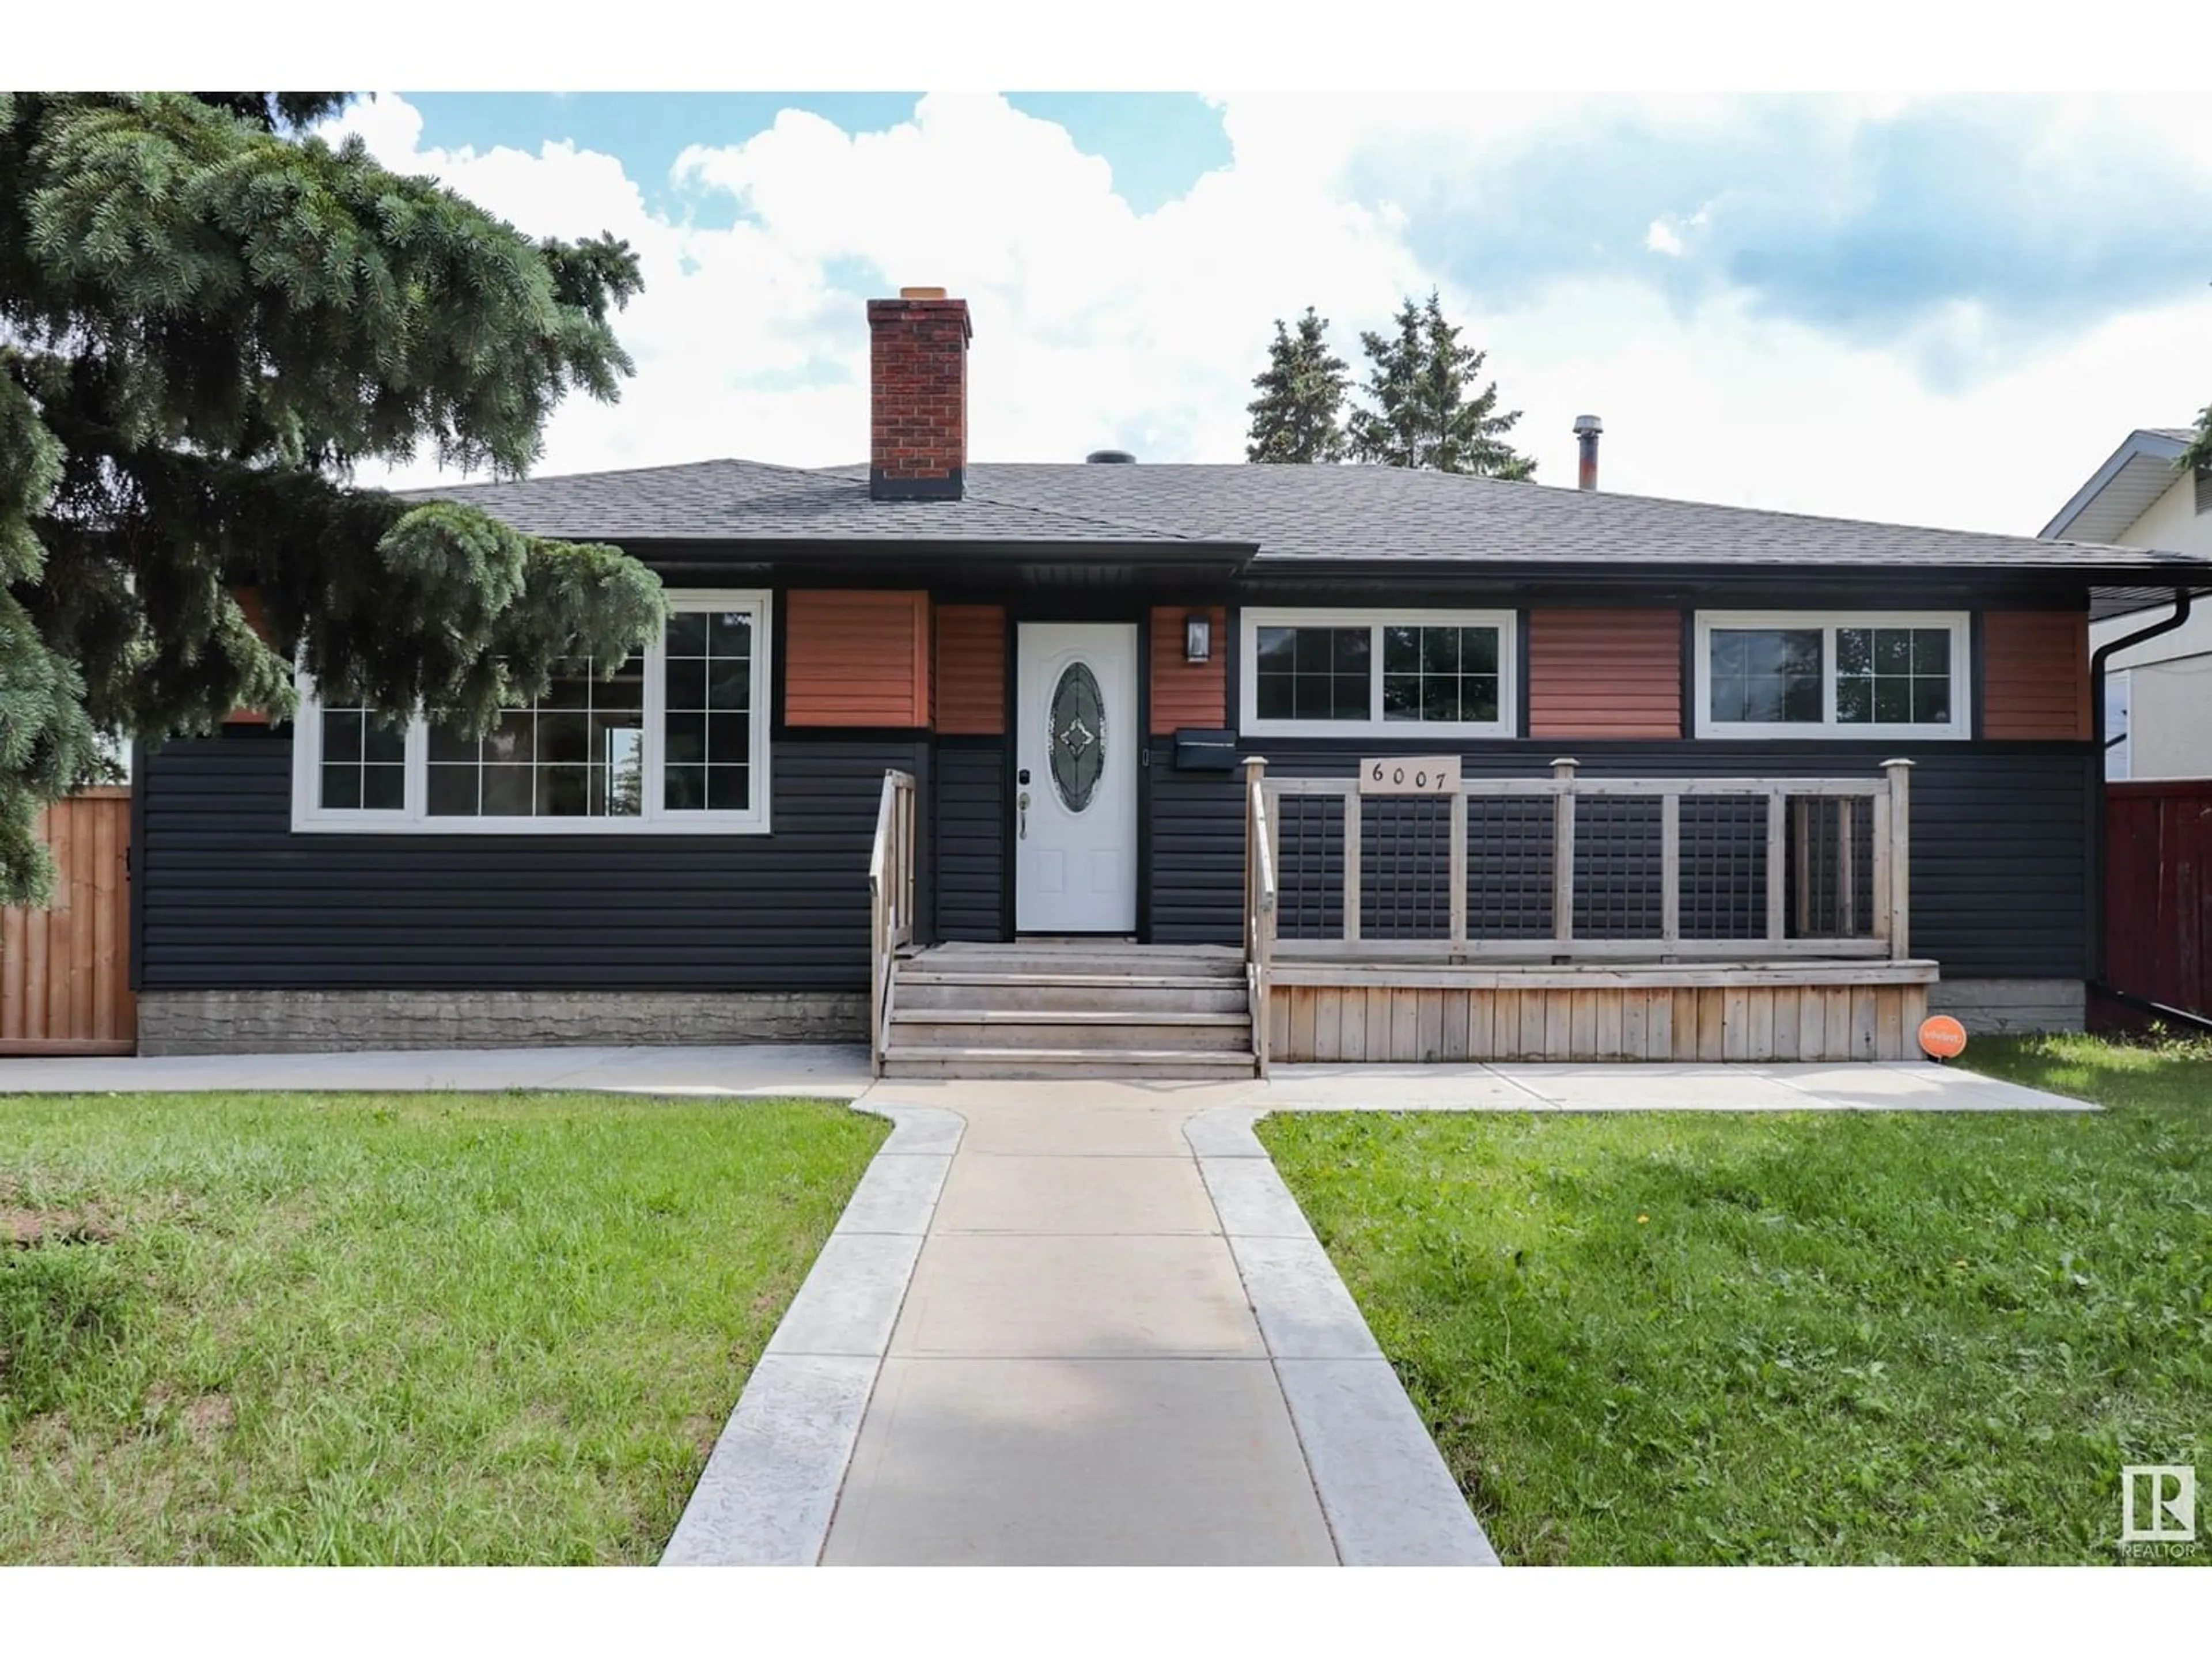 Home with vinyl exterior material for 6007 141 AV NW, Edmonton Alberta T5A1H9